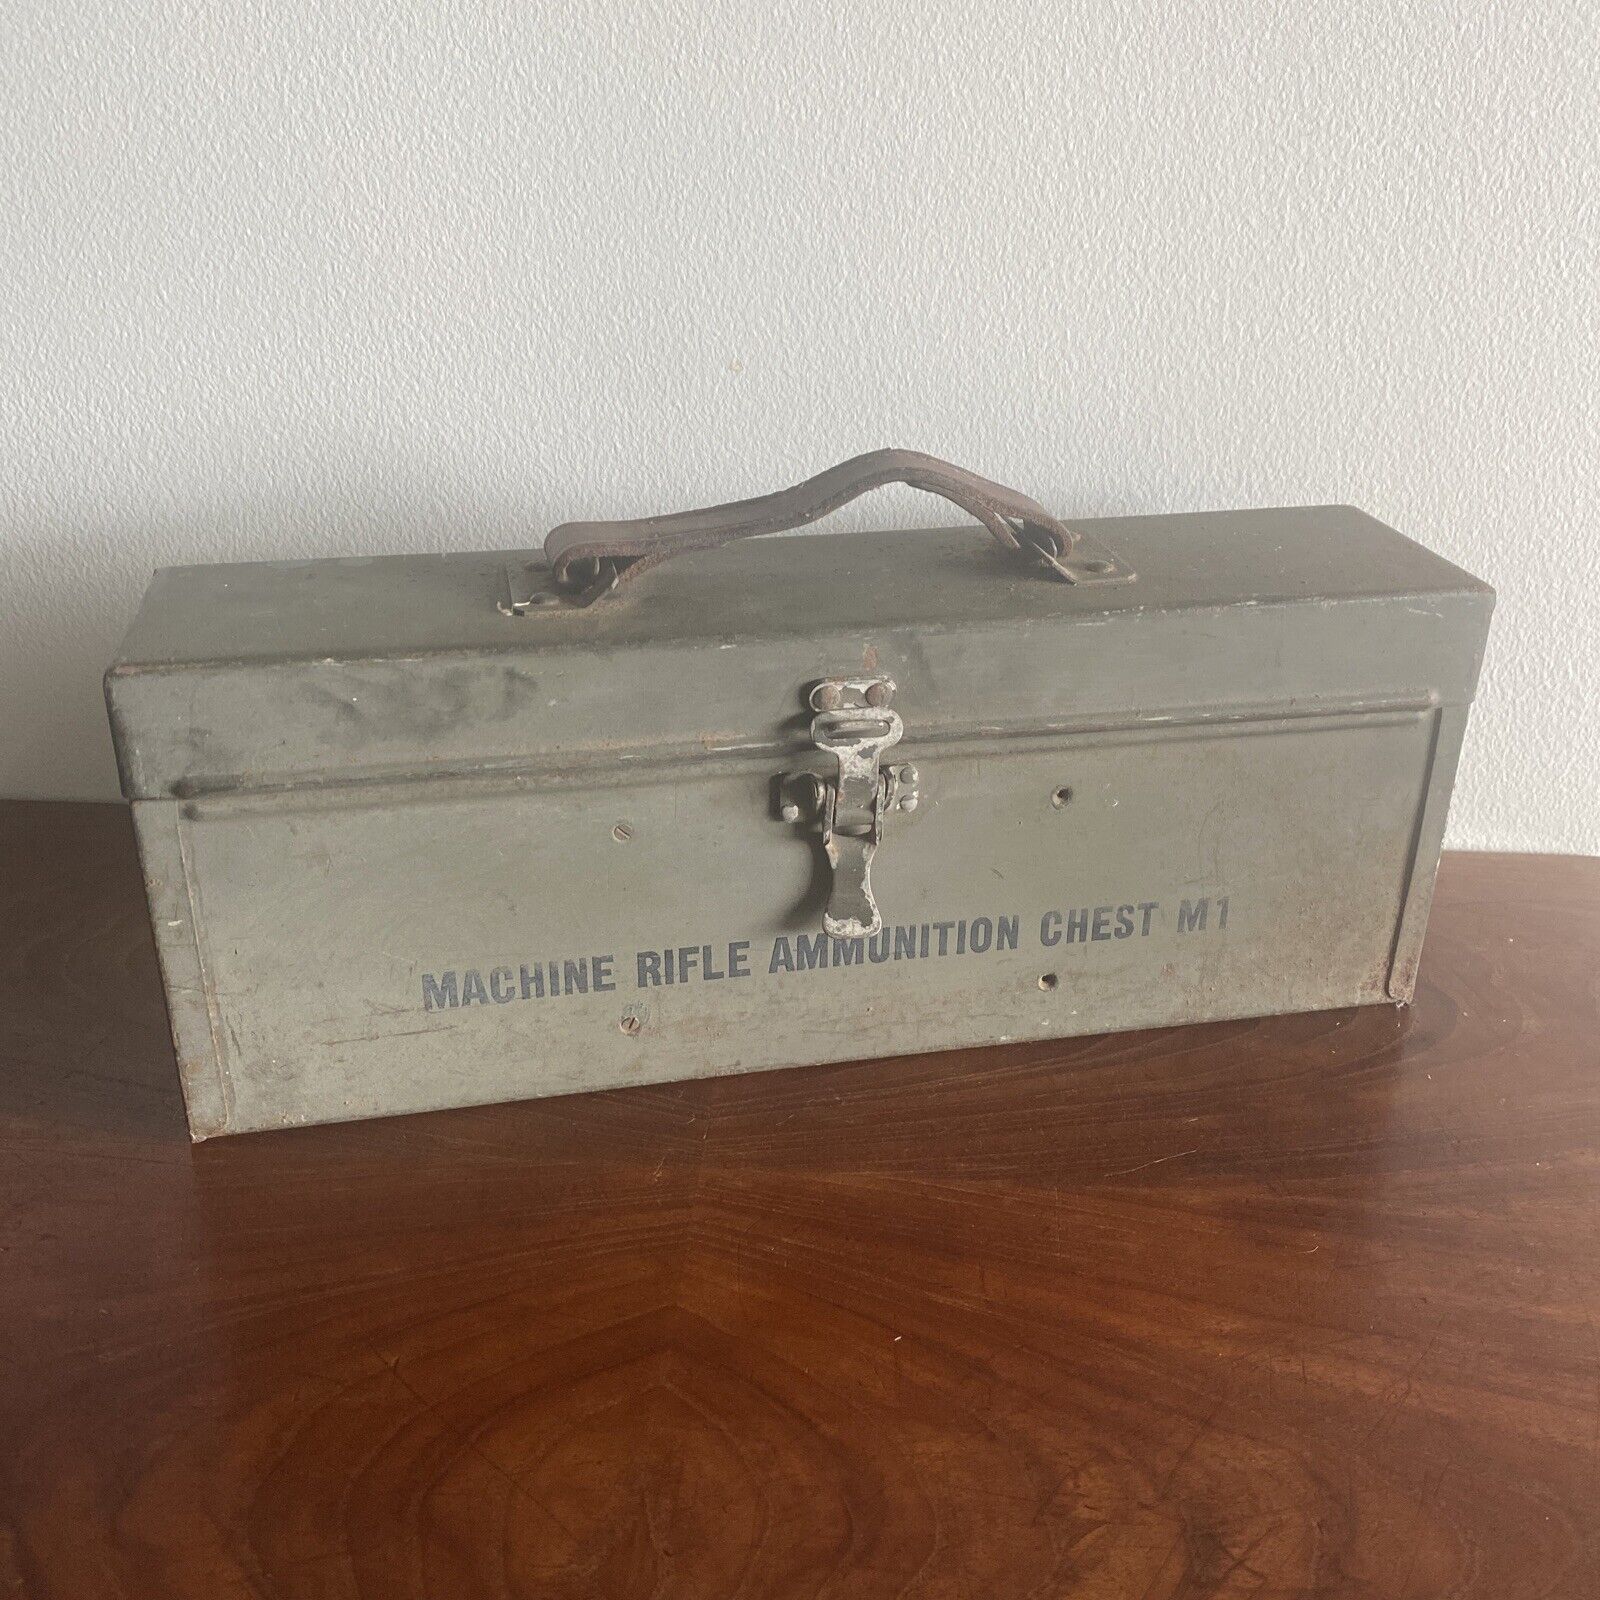 MACHINE RIFLE AMMUNITION CHEST M1 Browning BAR AUTO WW2 AMMO BOX Leather Strap